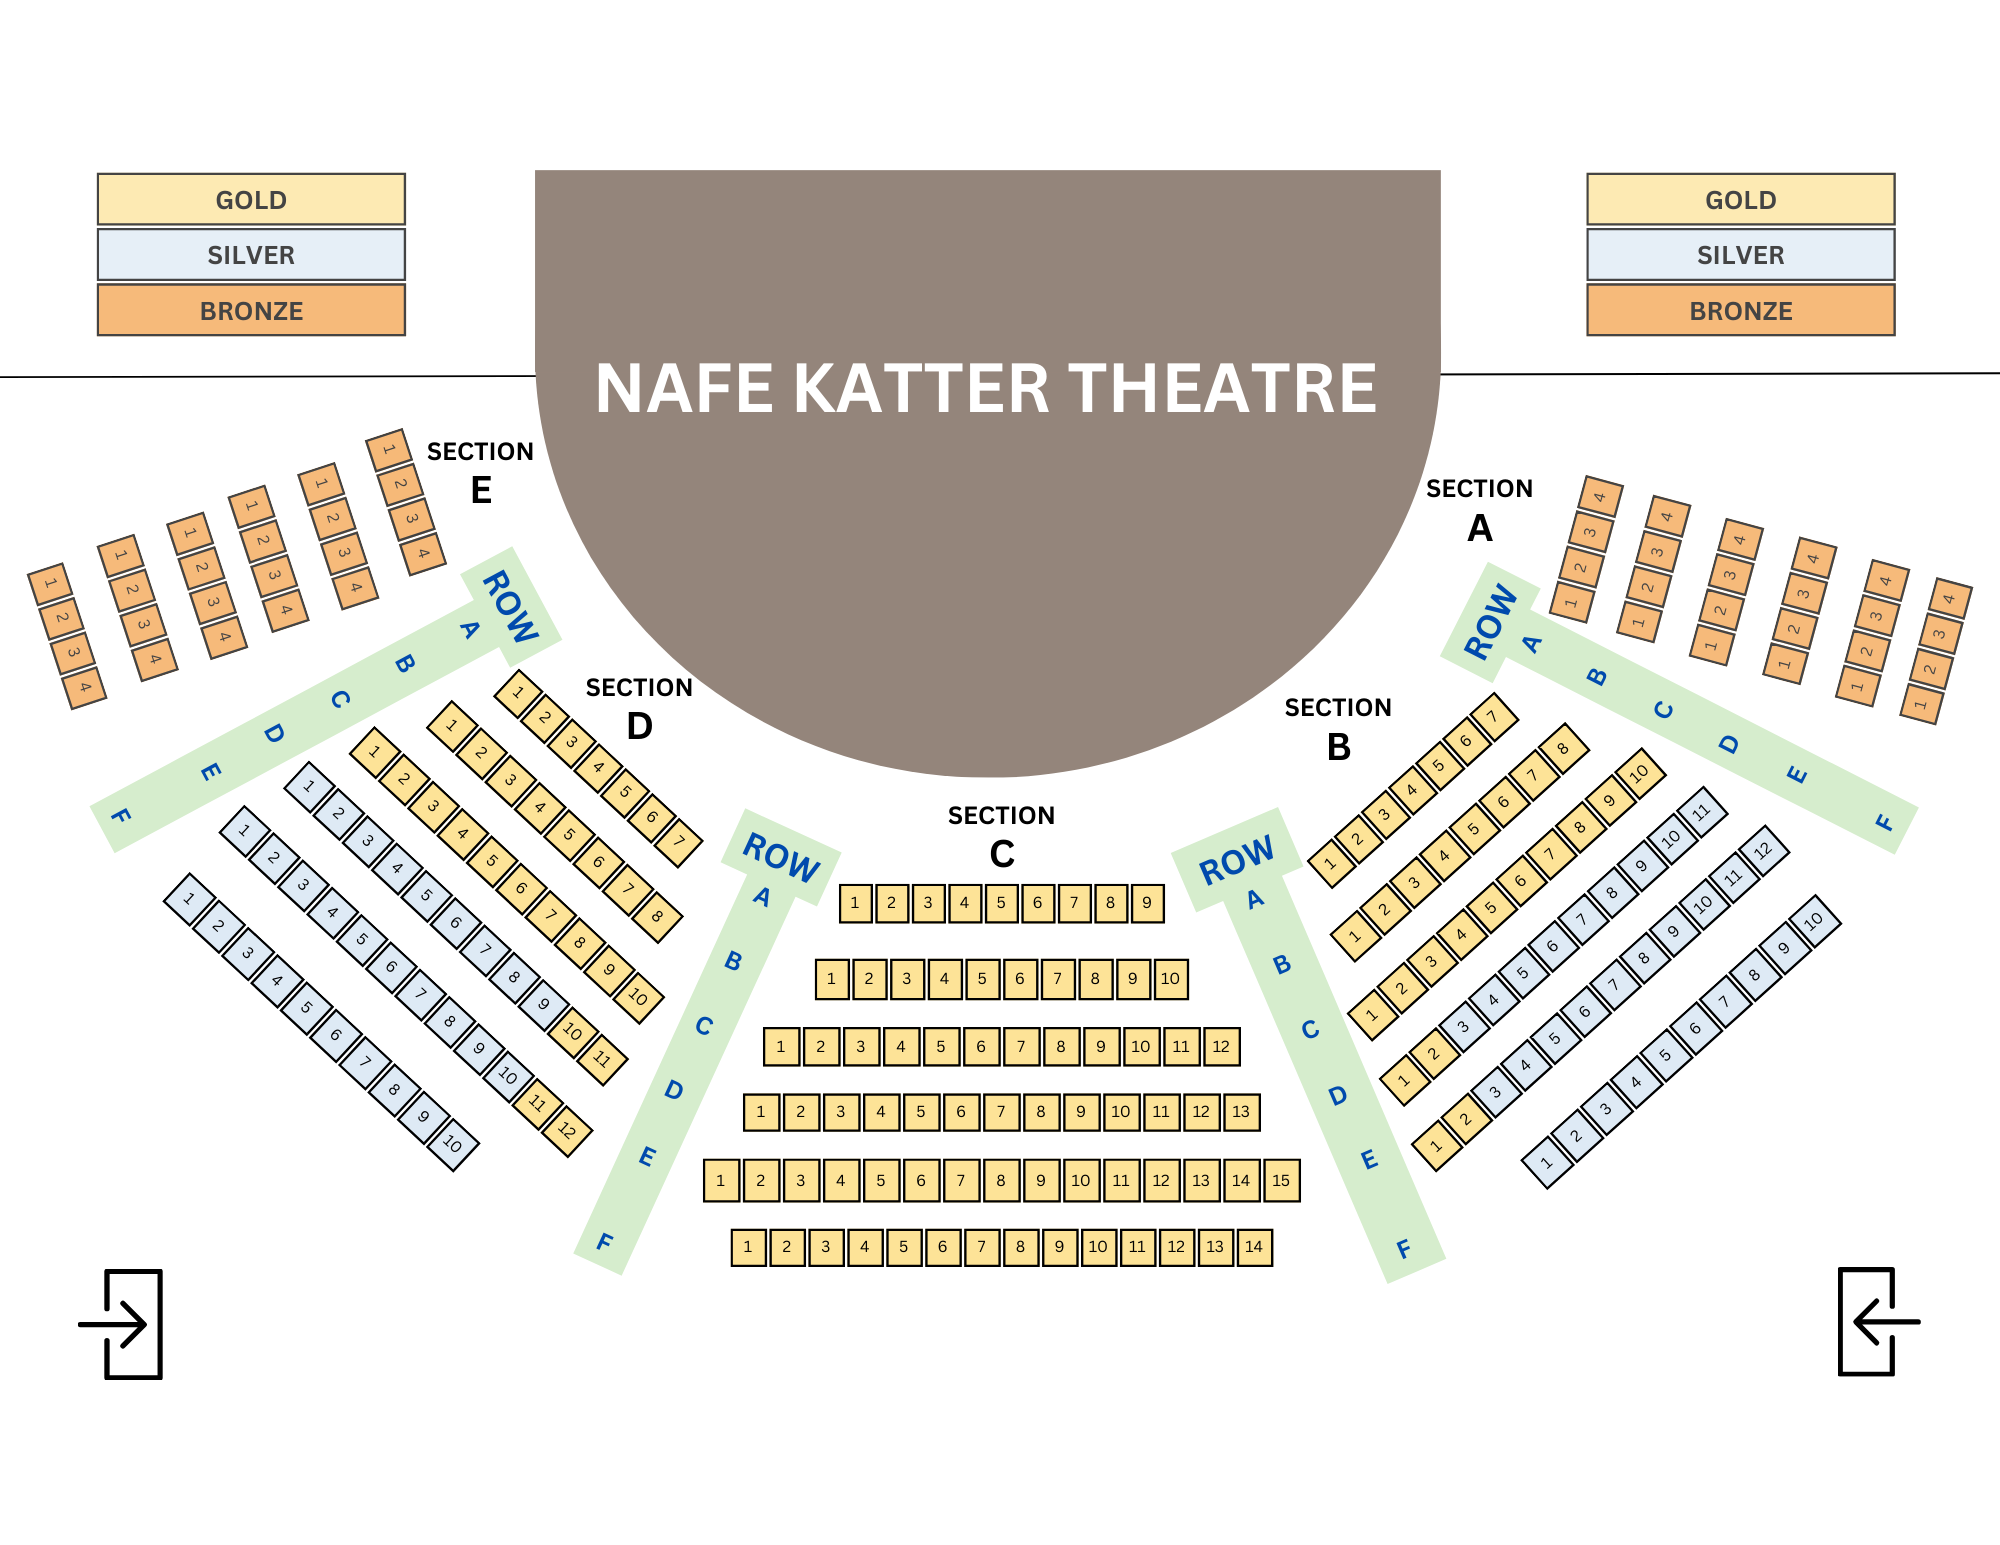 Nate Katter Theatre map